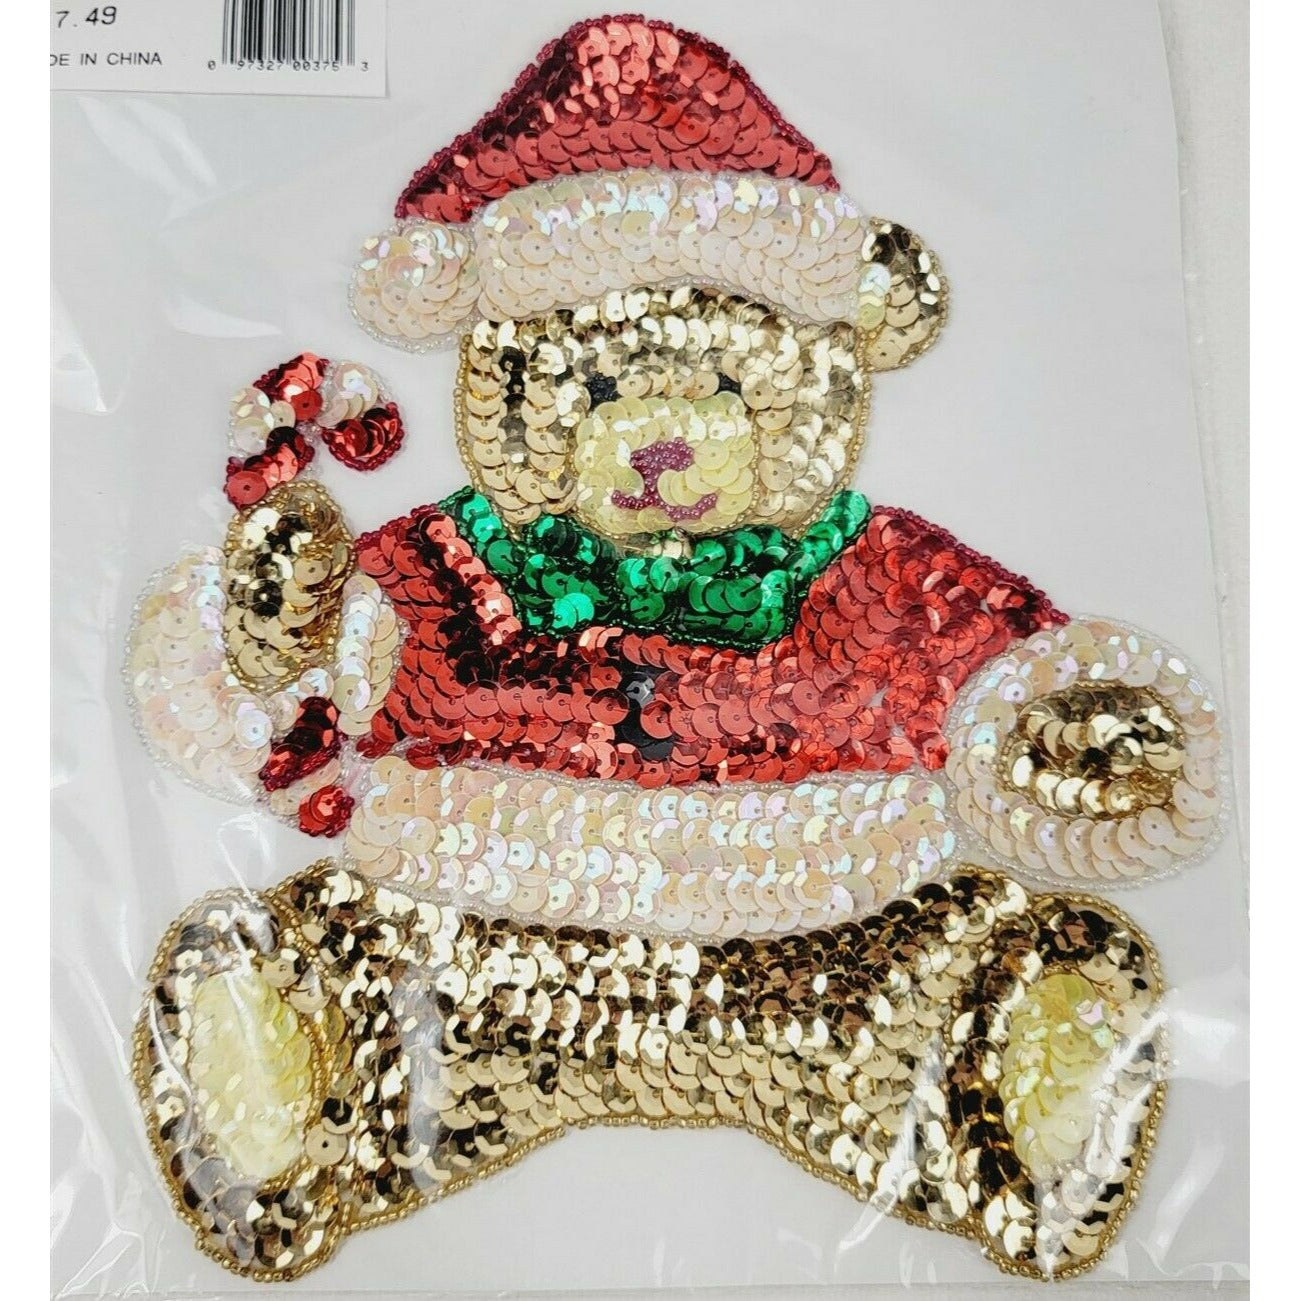 Glitz Applique Lot Teddy Bear Wreath Candy Cane Tree Christmas Holiday Sew Craft